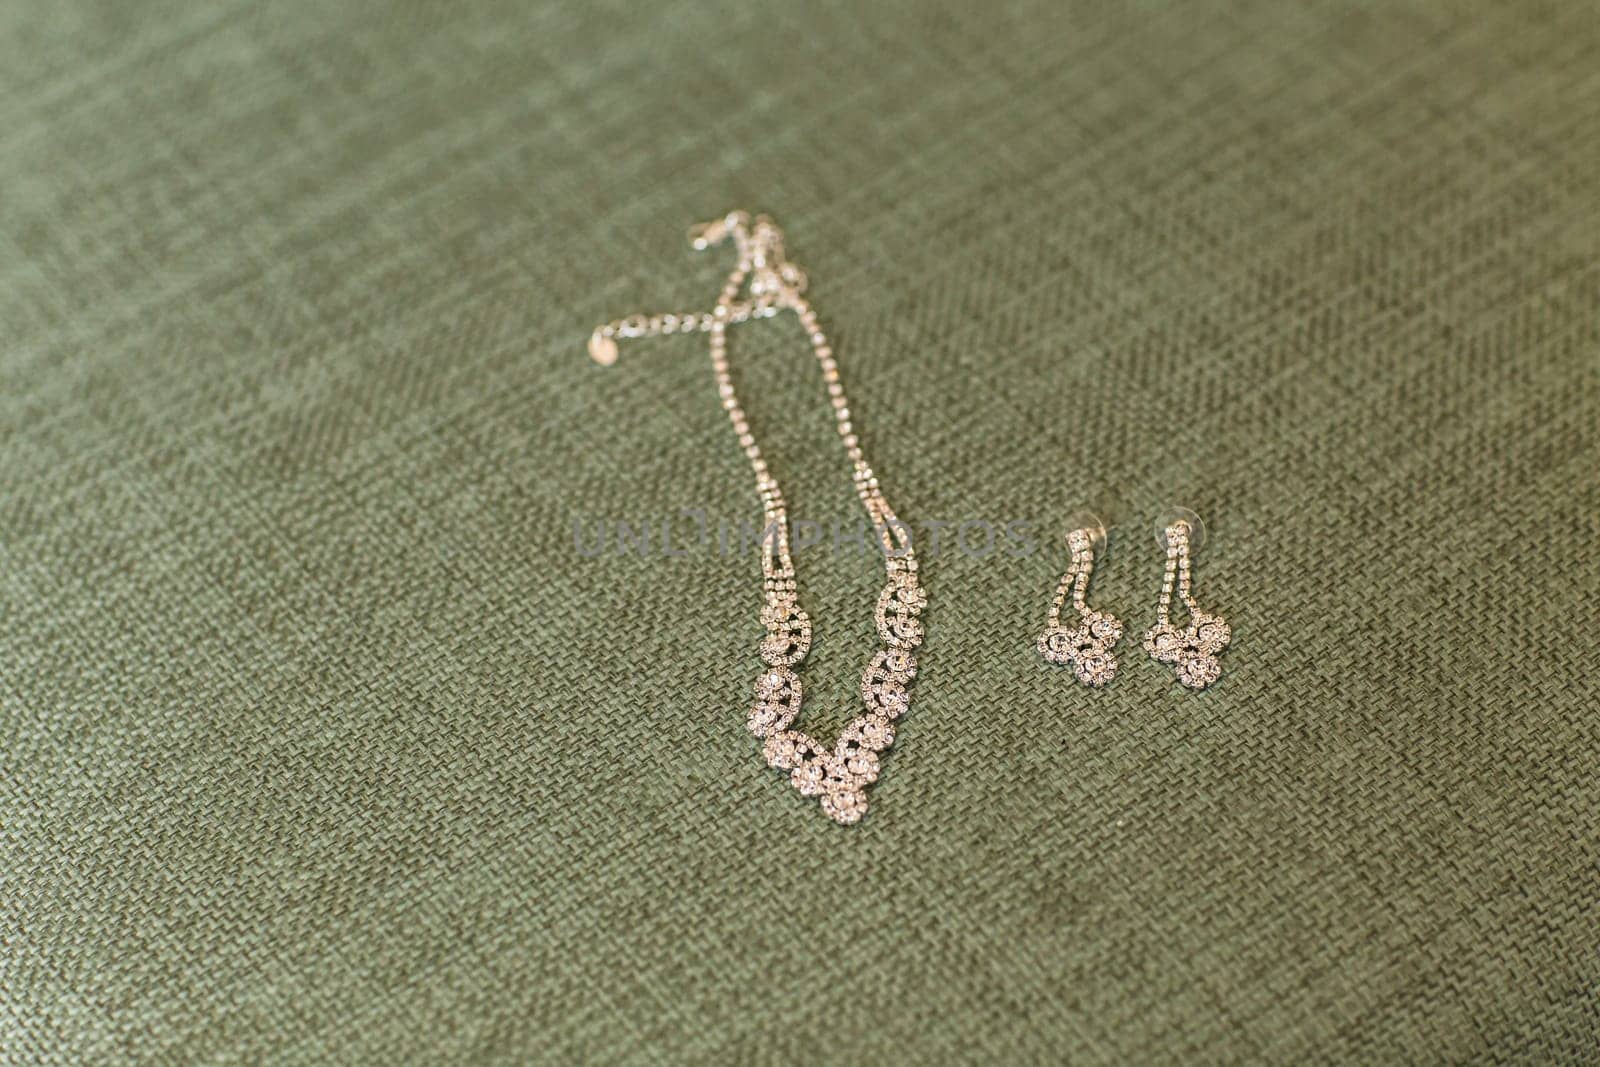 Pair of diamond earrings by Satura86